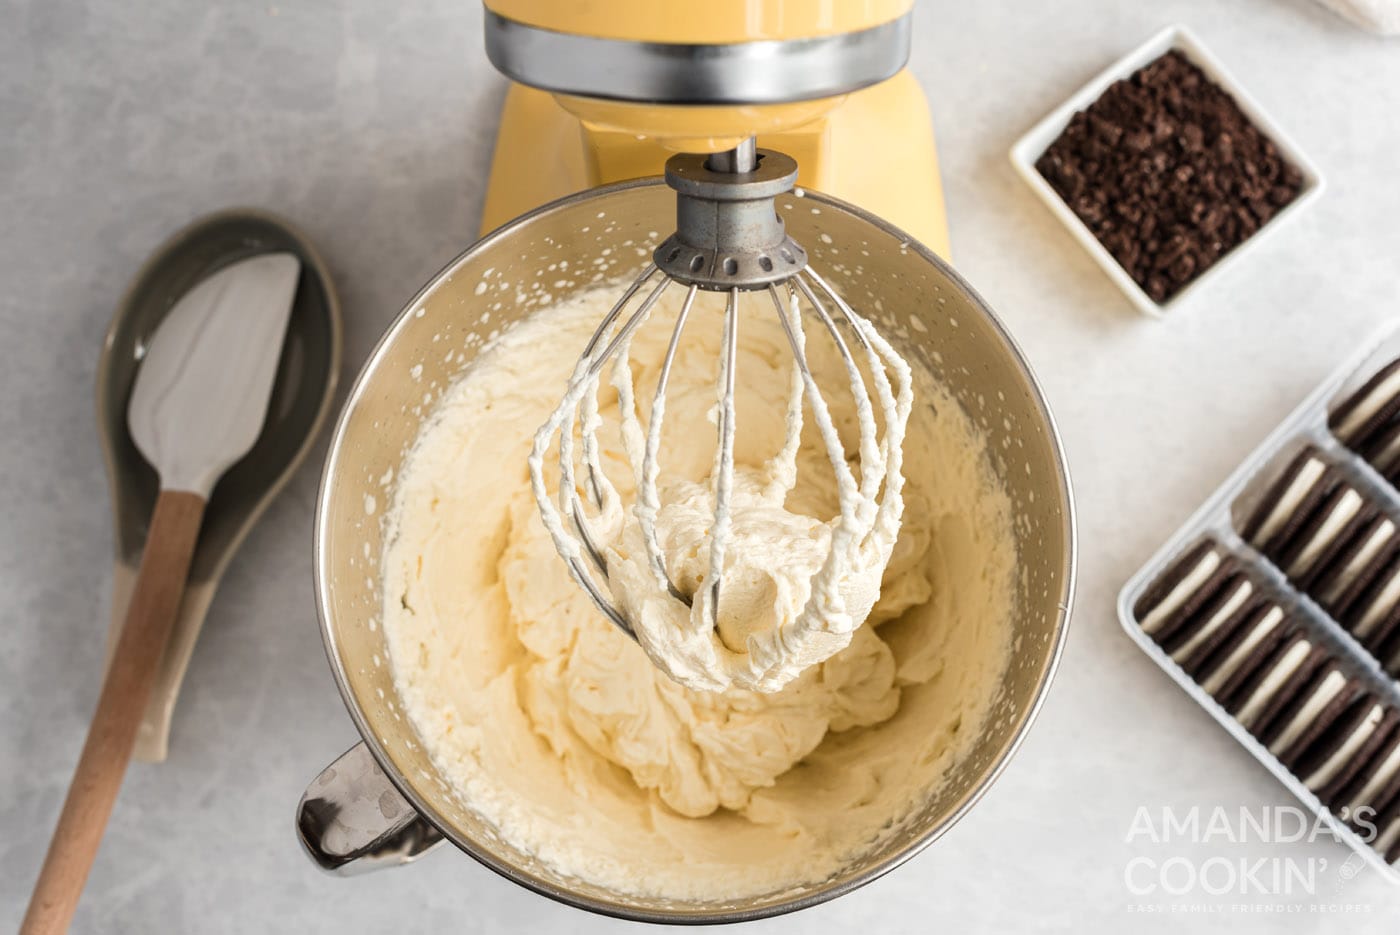 cream, powdered sugar, and vanilla in a stand mixer bowl